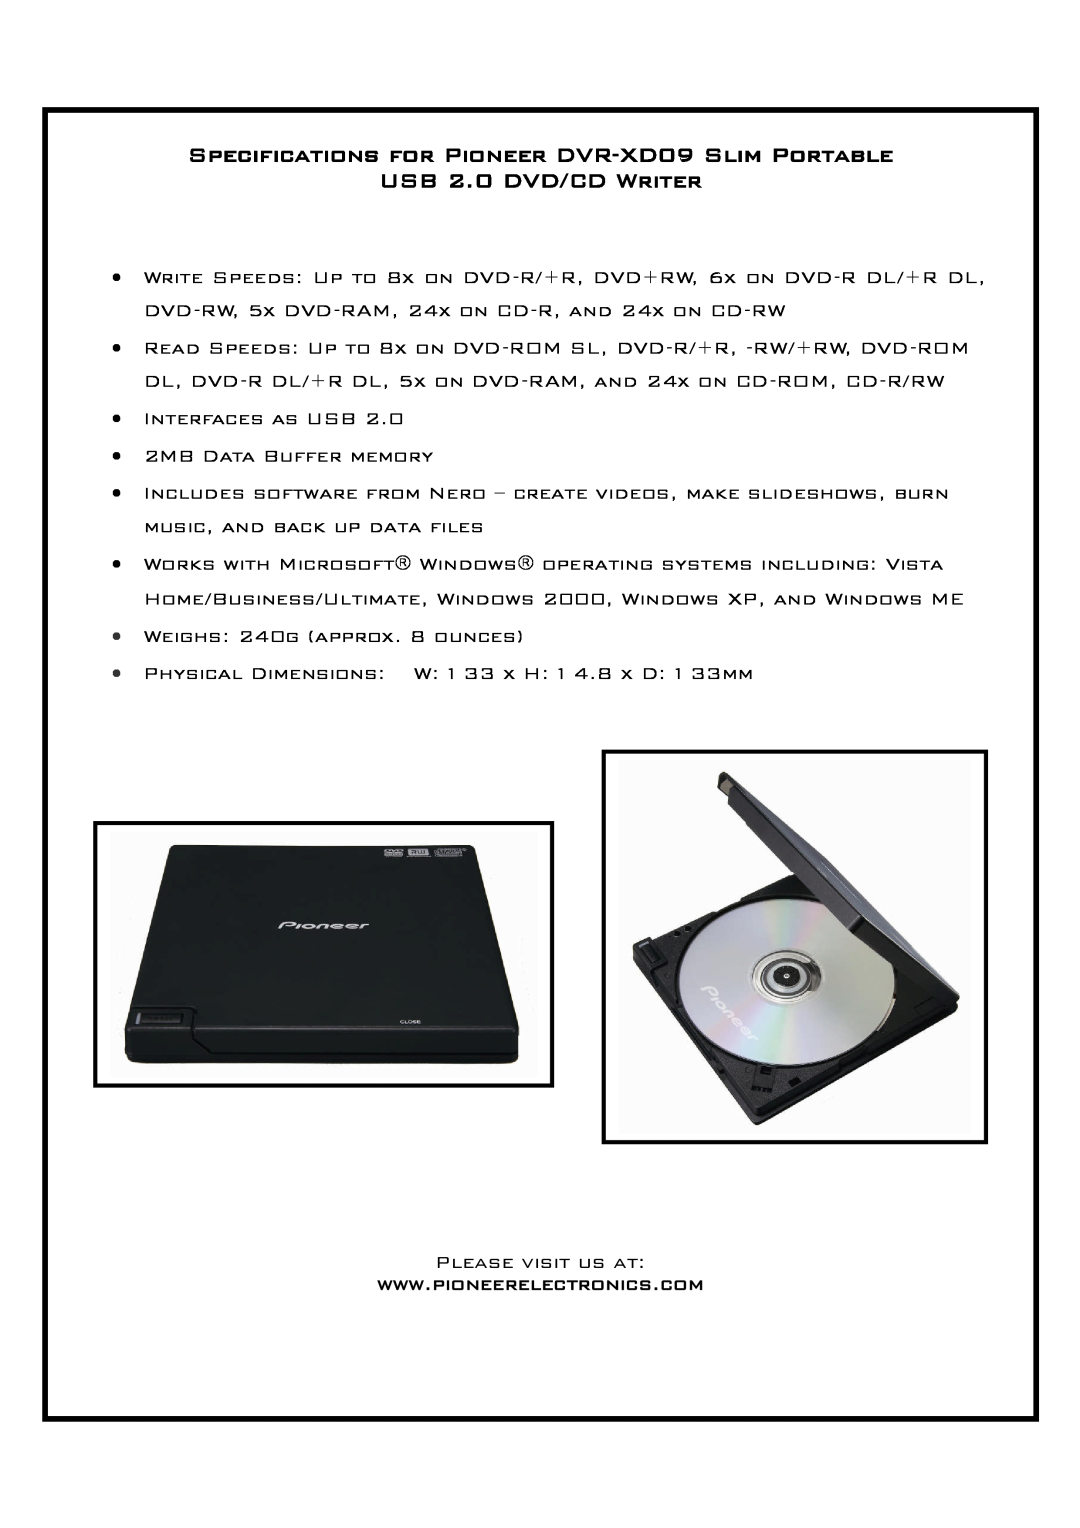 Pioneer manual Specifications for Pioneer DVR-XD09 Slim Portable, USB 2.0 DVD/CD Writer 